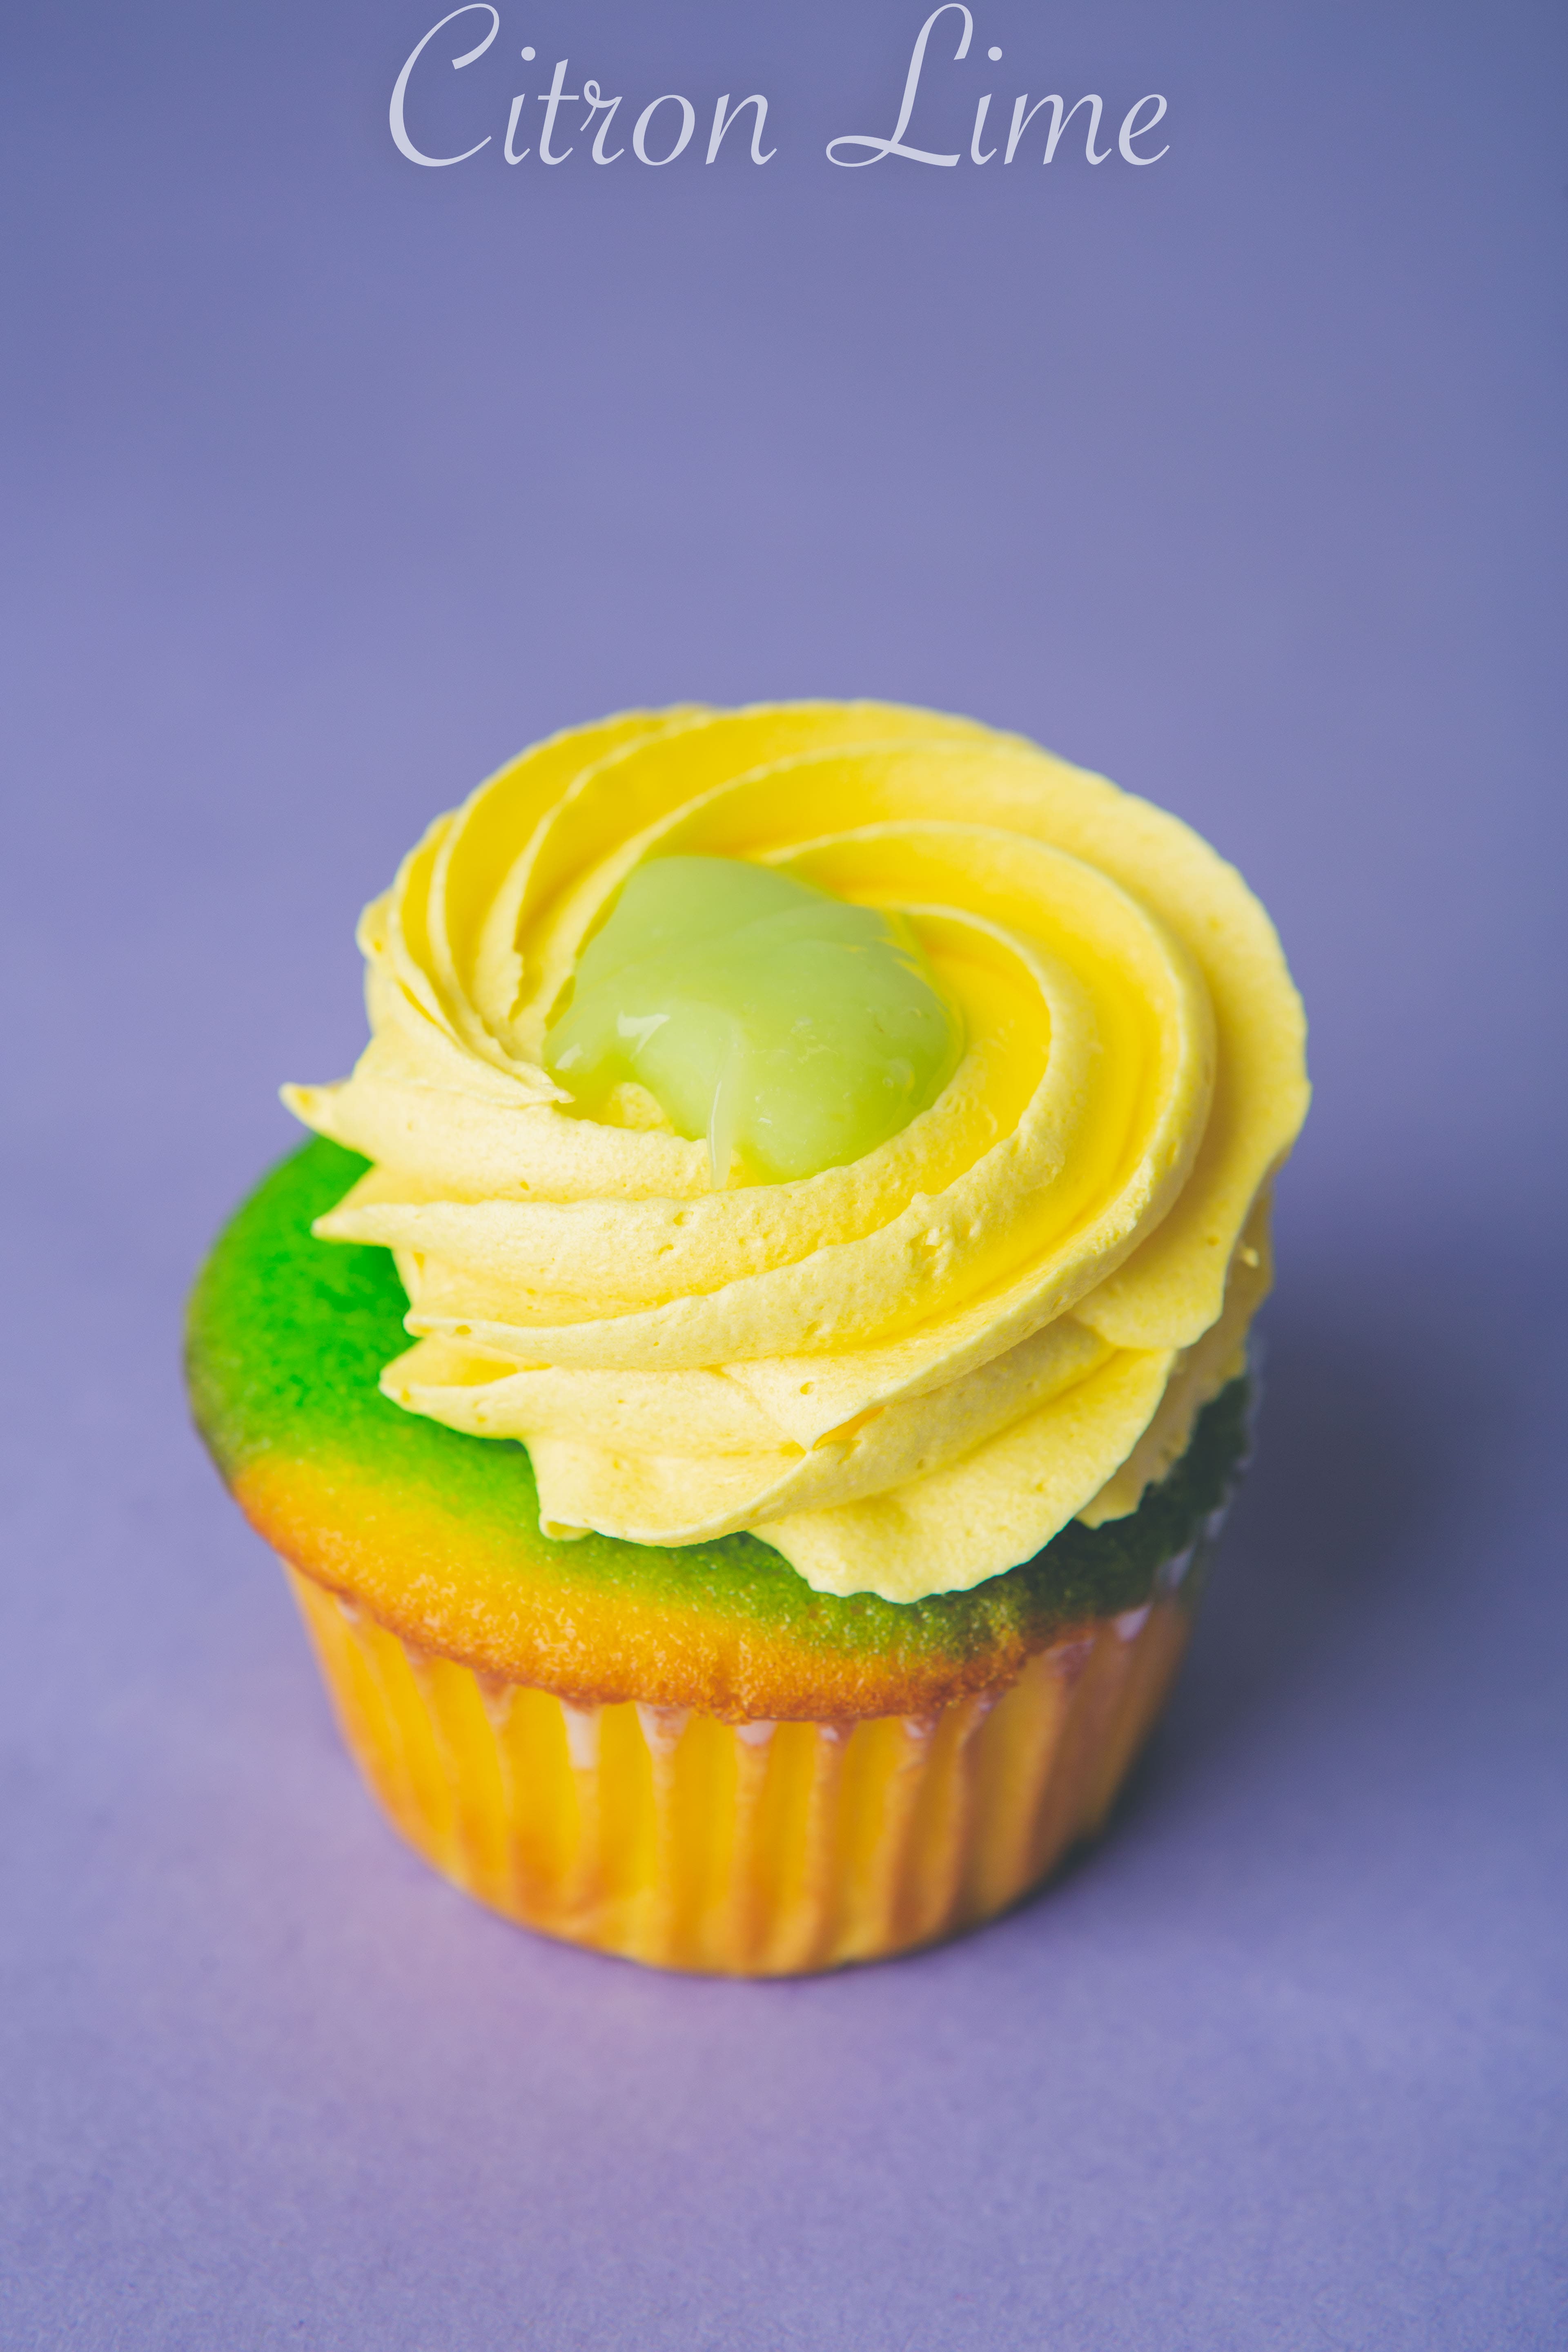 Cupcakes - Citron Lime